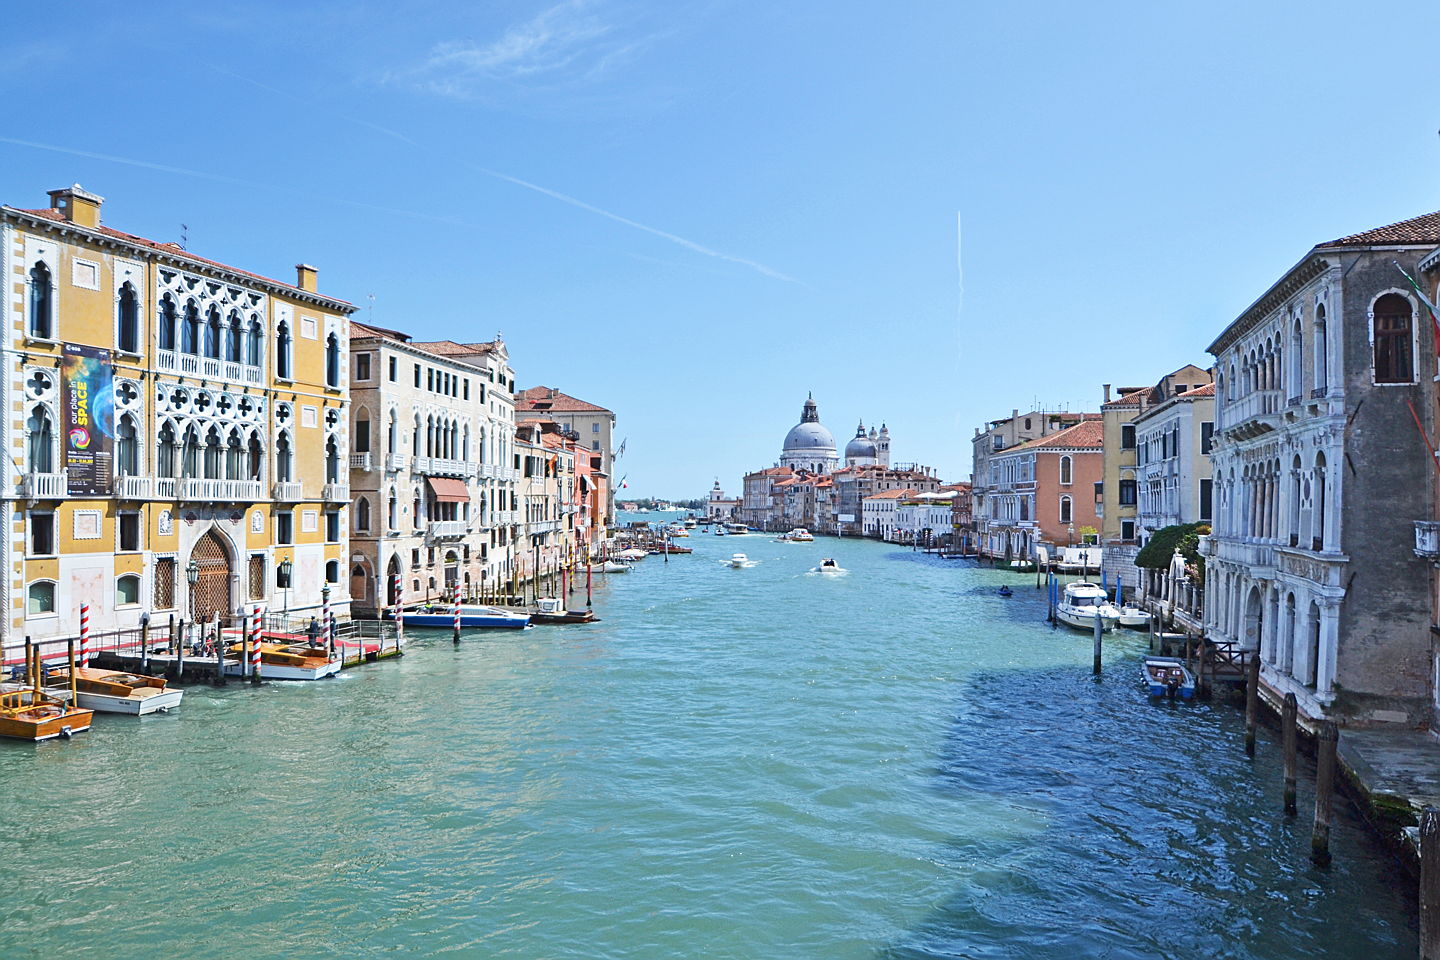  Venice
- salute.jpg